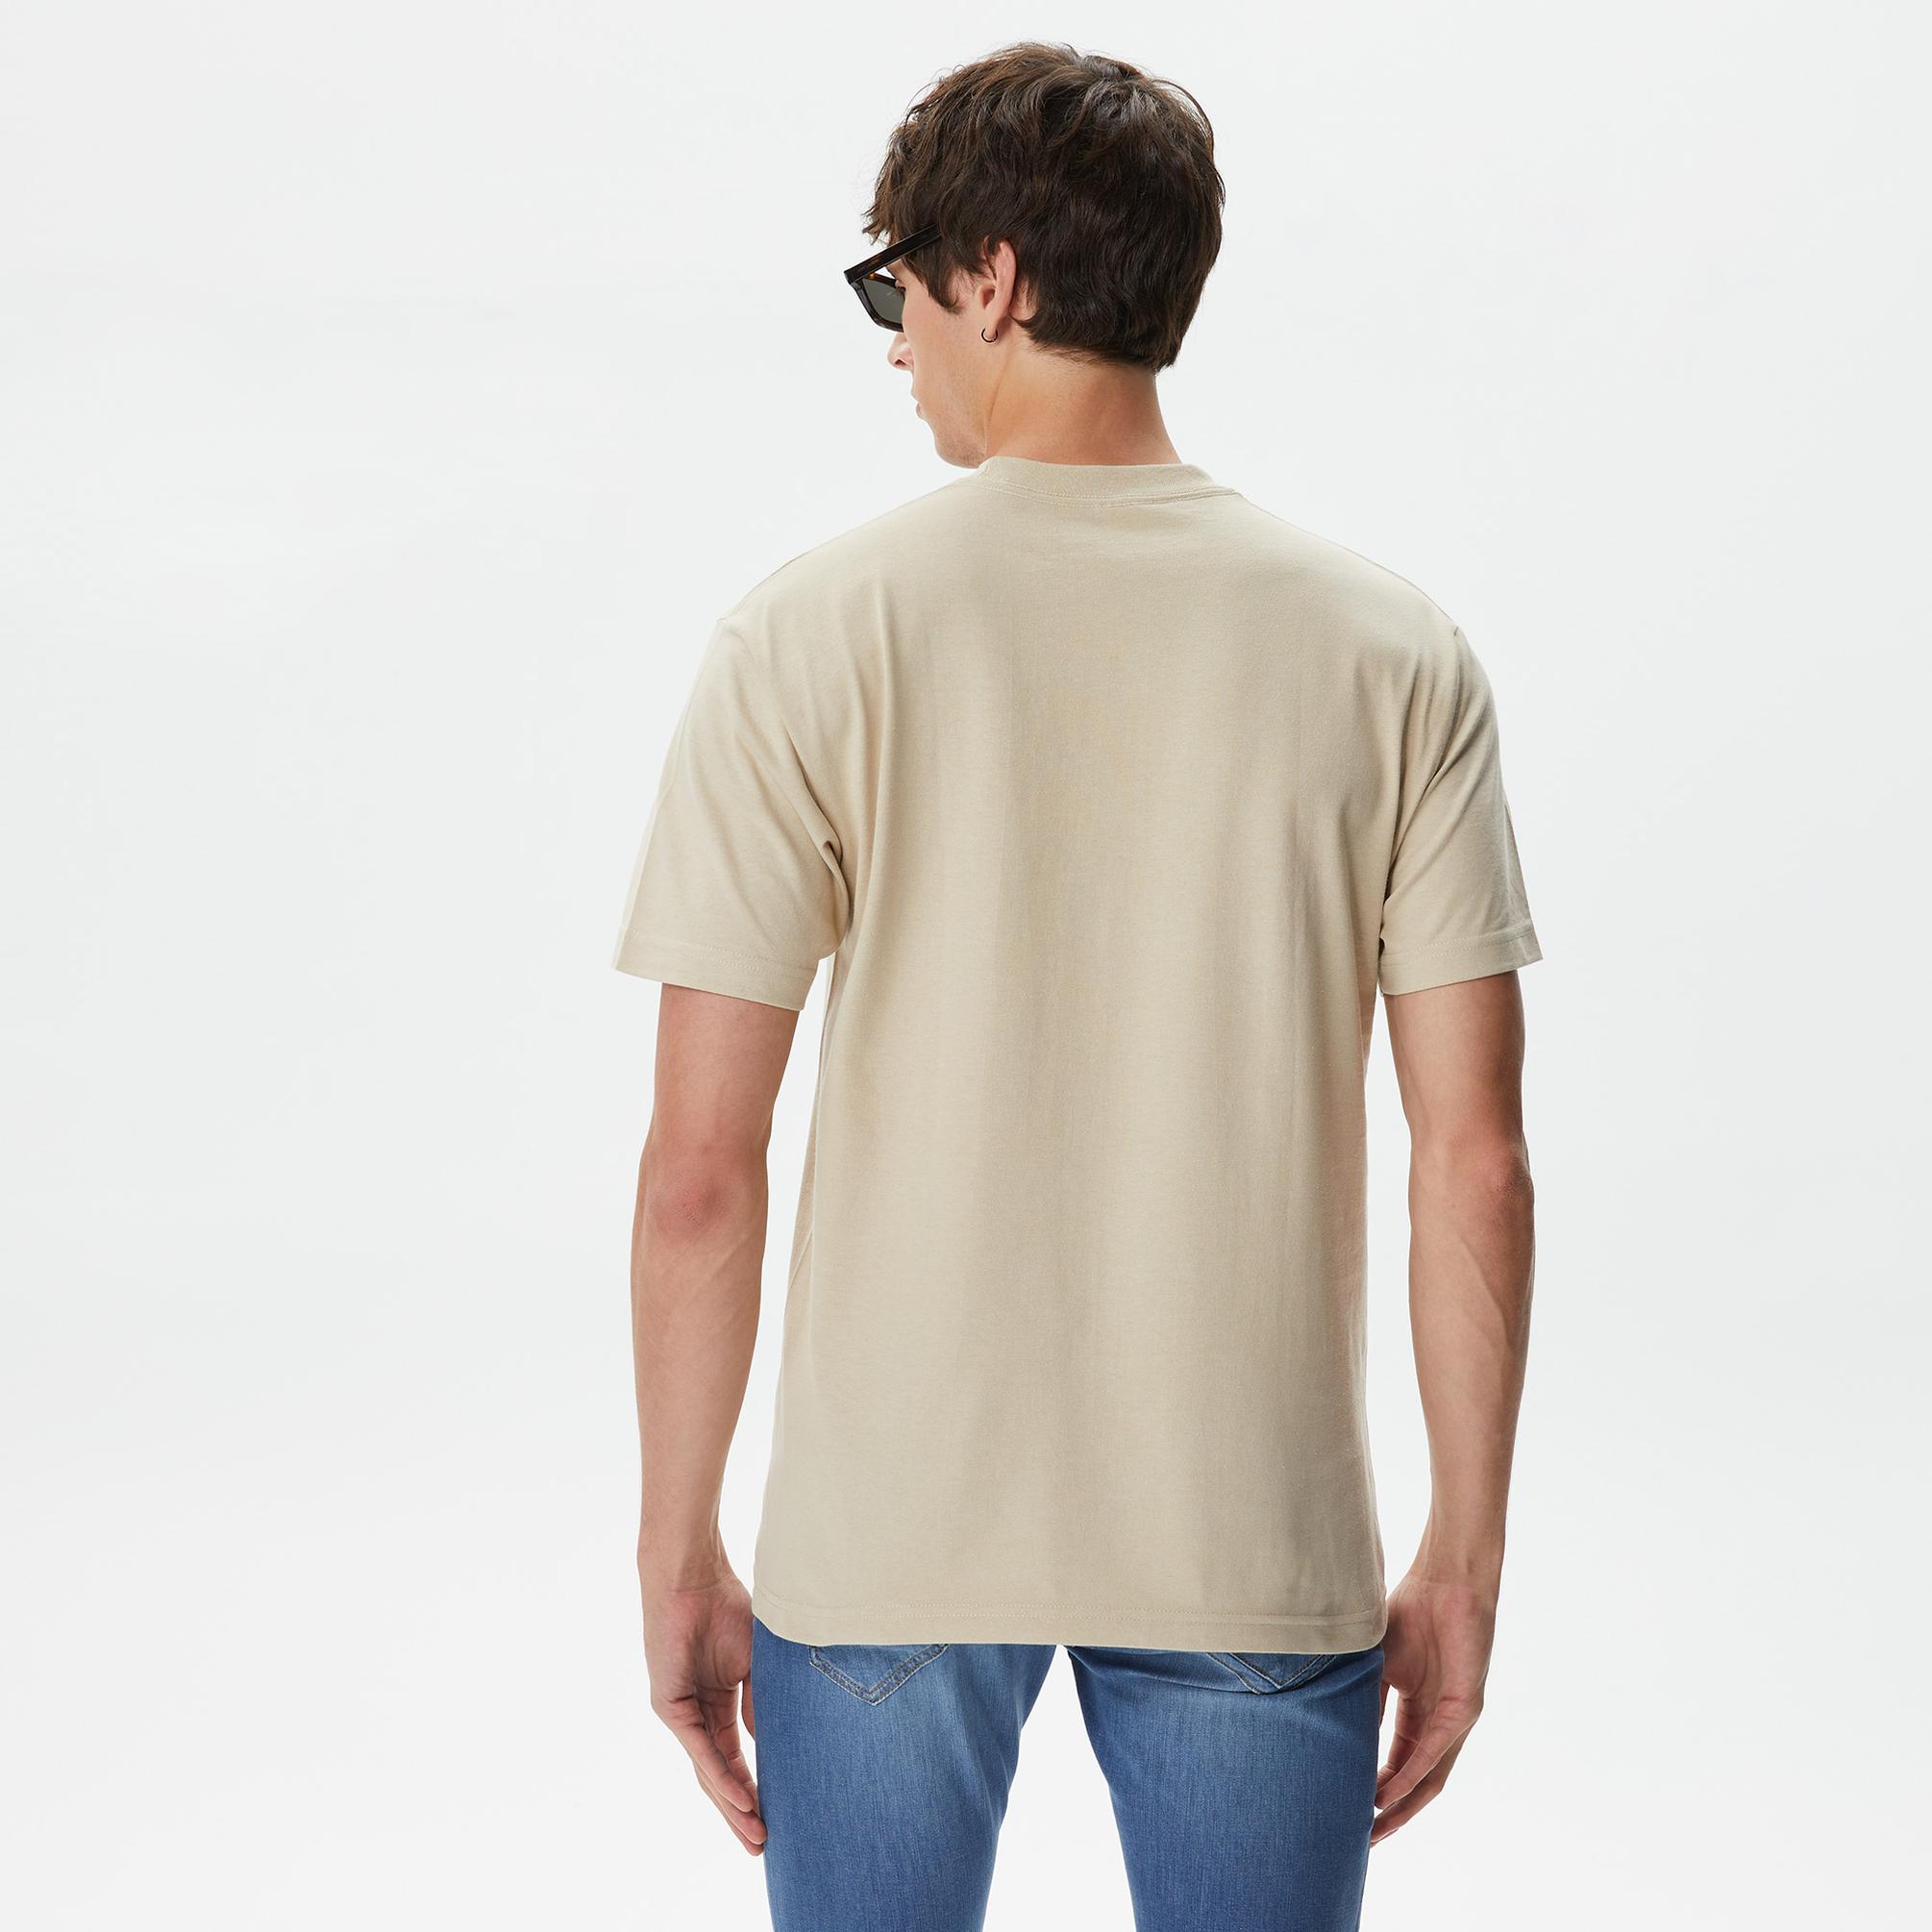  Huf Produce Embroidered Erkek Krem T-Shirt